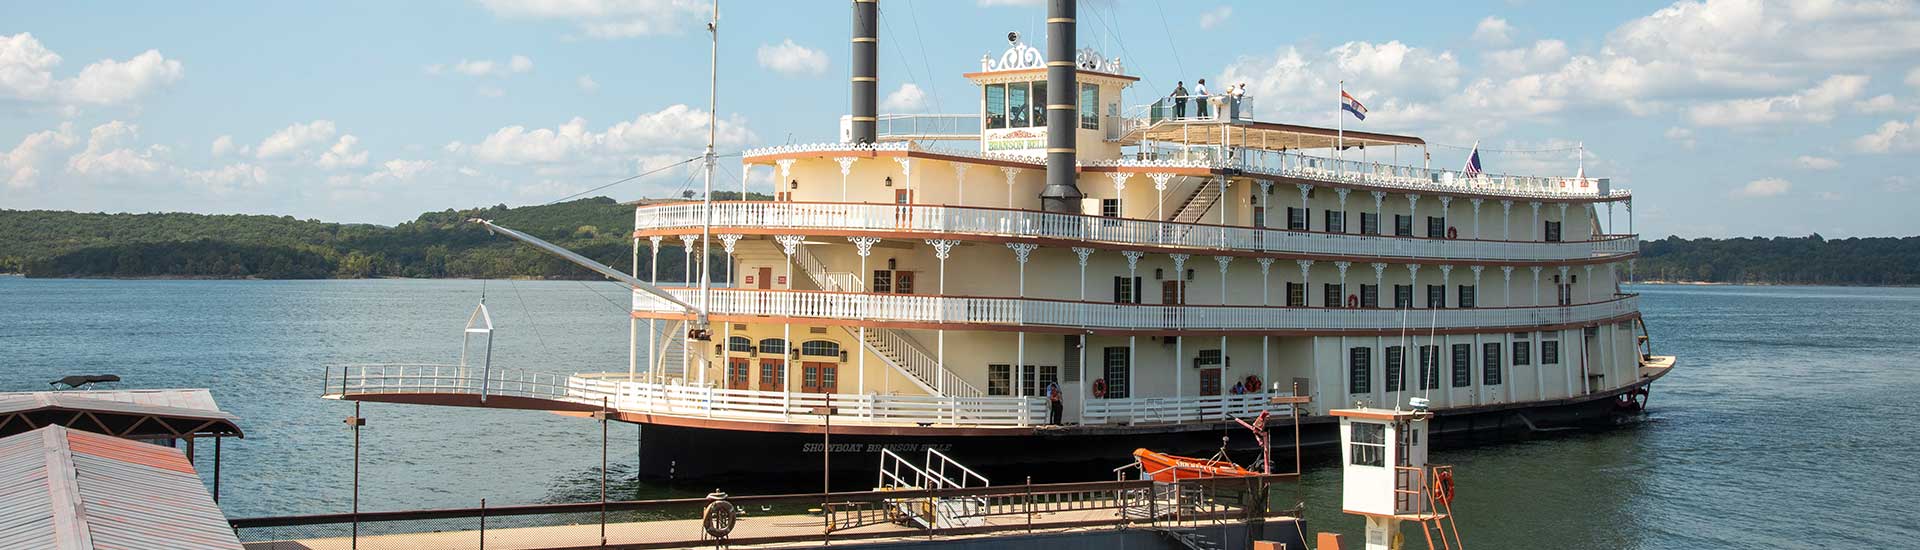 Showboat Branson Bell docked on Table Rock Lake, Branson, MO.